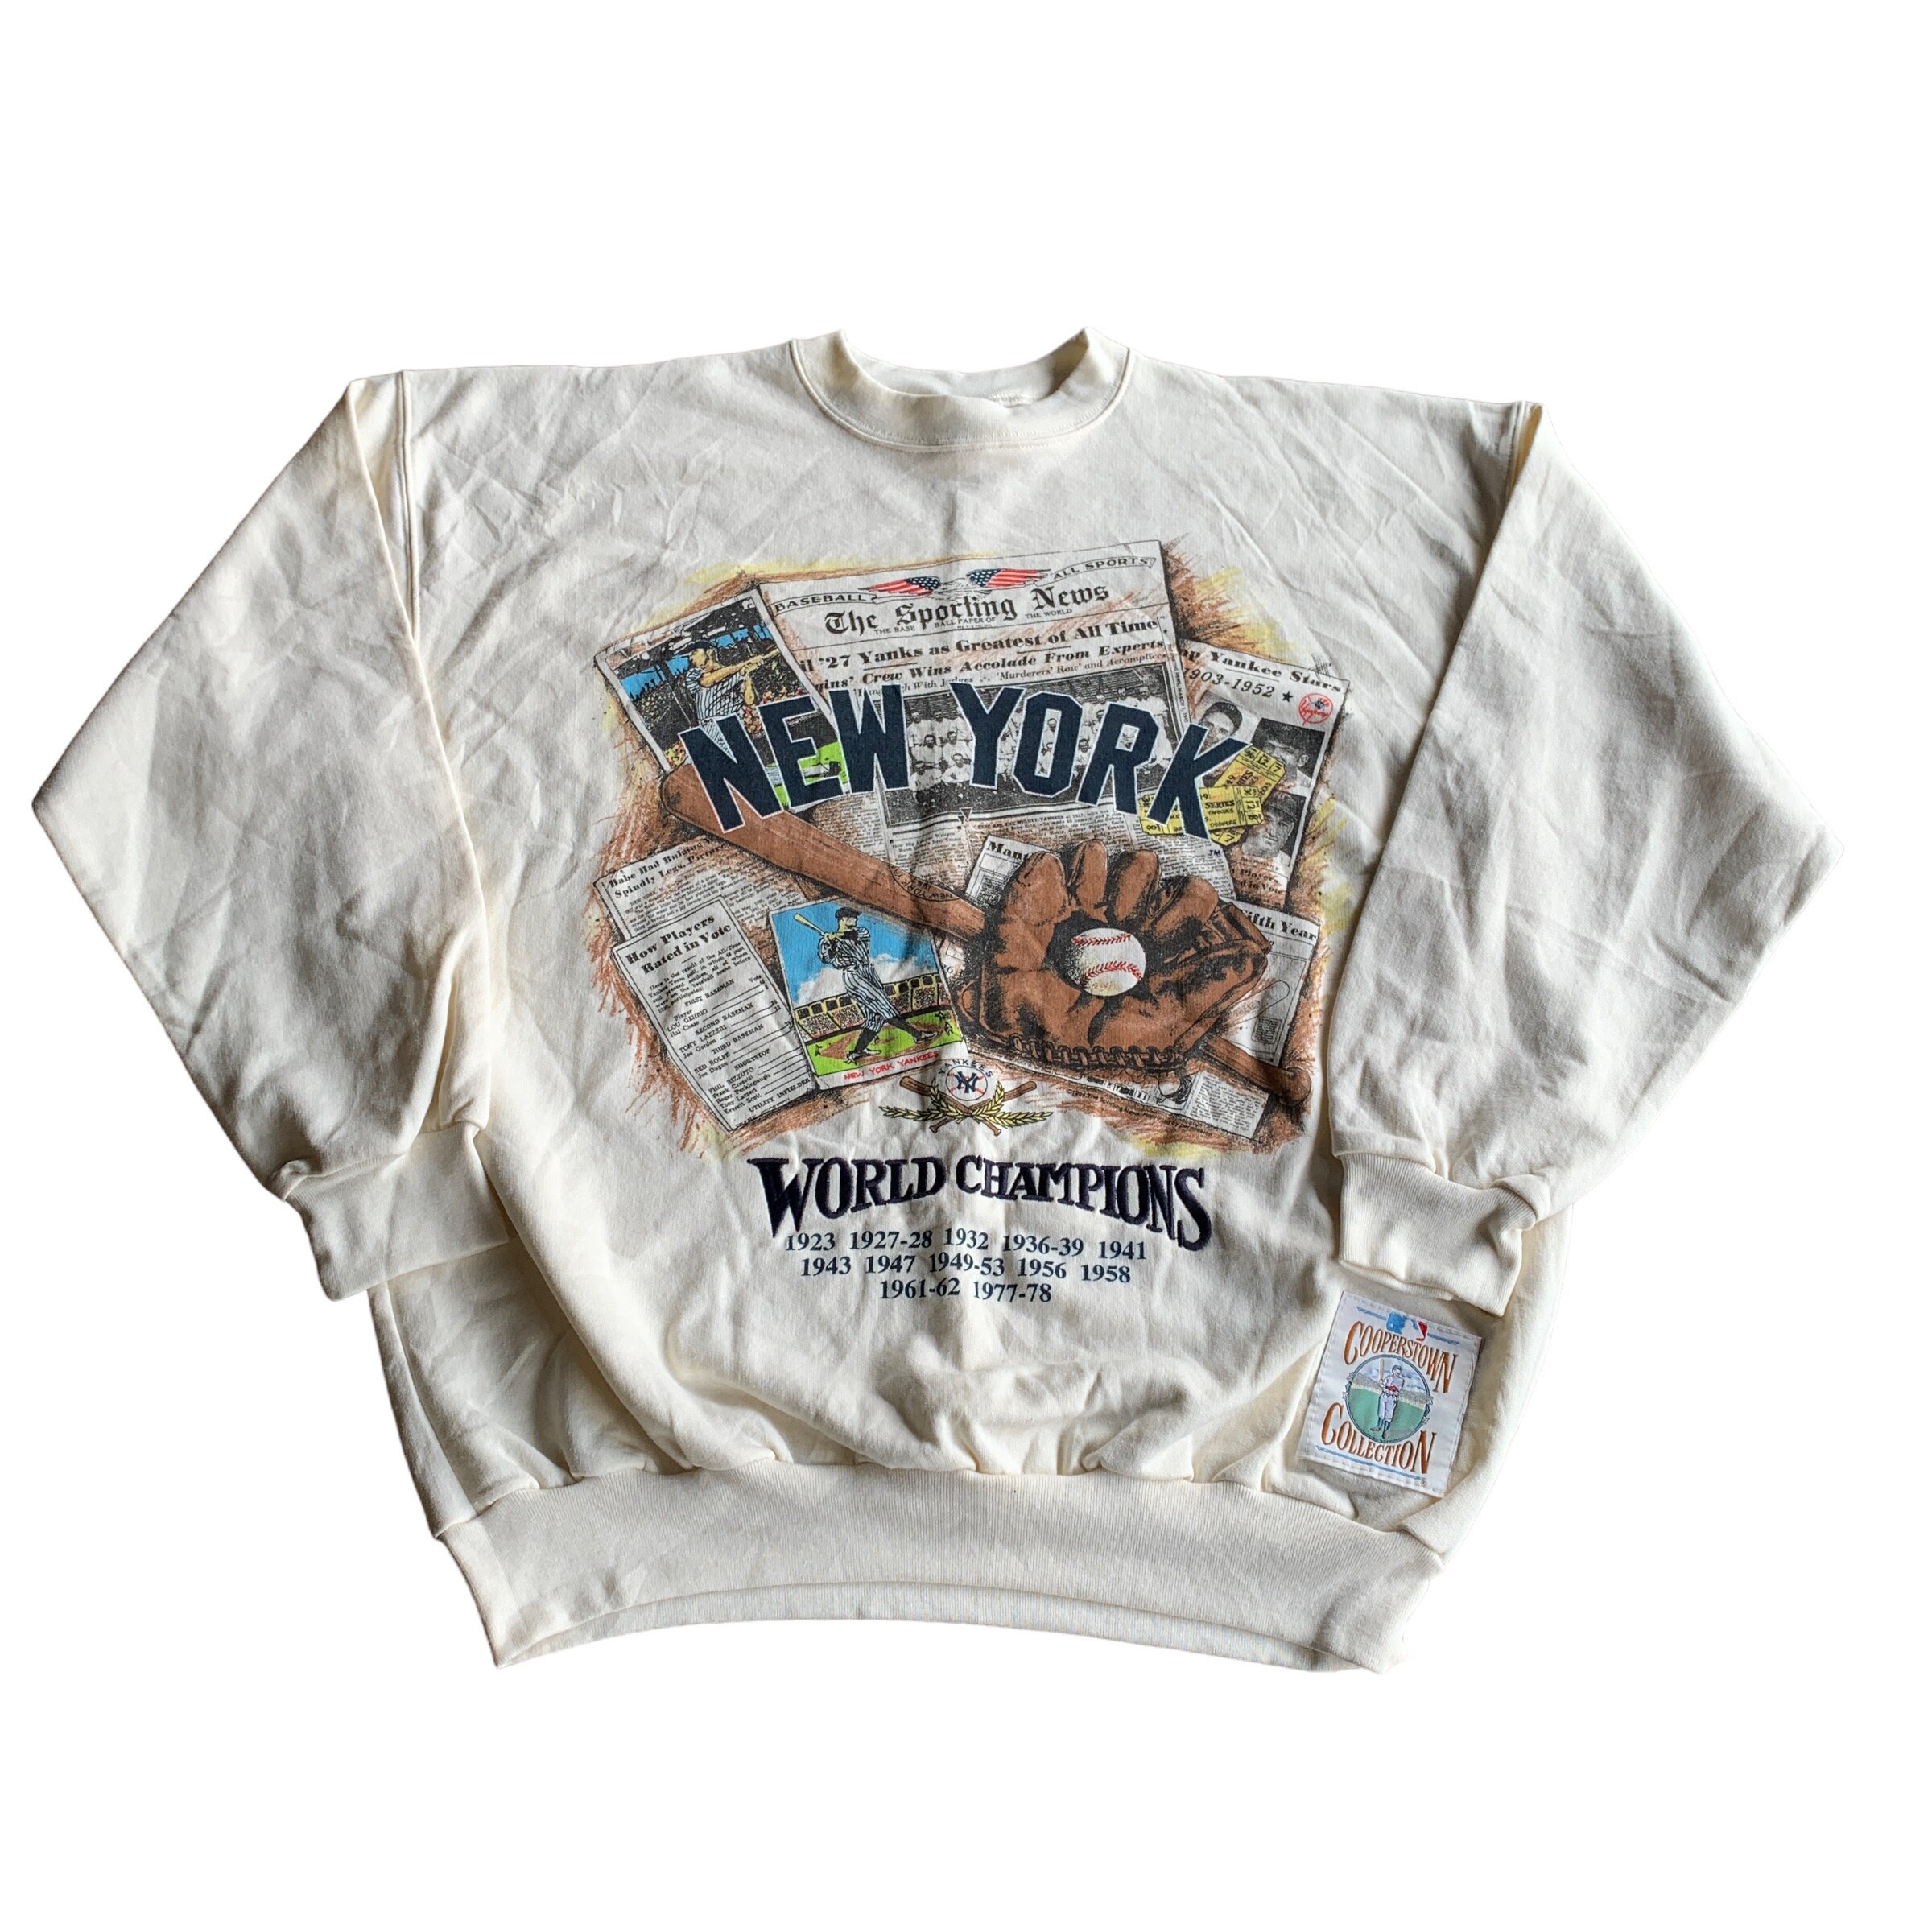 Official New york yankees infant mascot 2.0 T-shirt, hoodie, tank